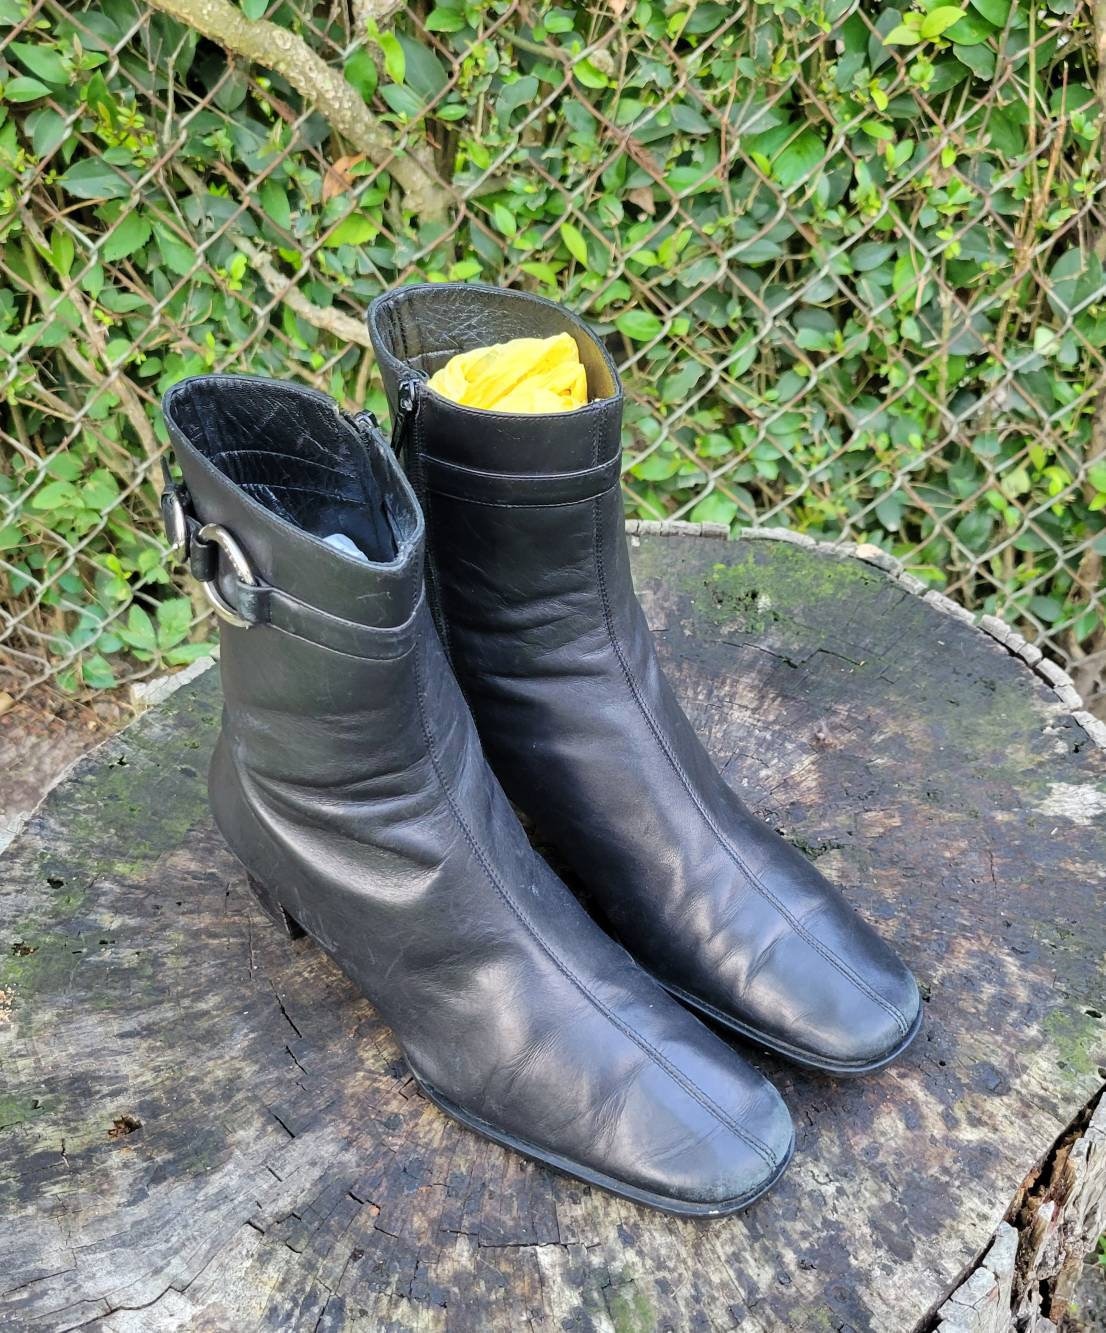 Prada Men's Cobblestone Leather Ankle Boots